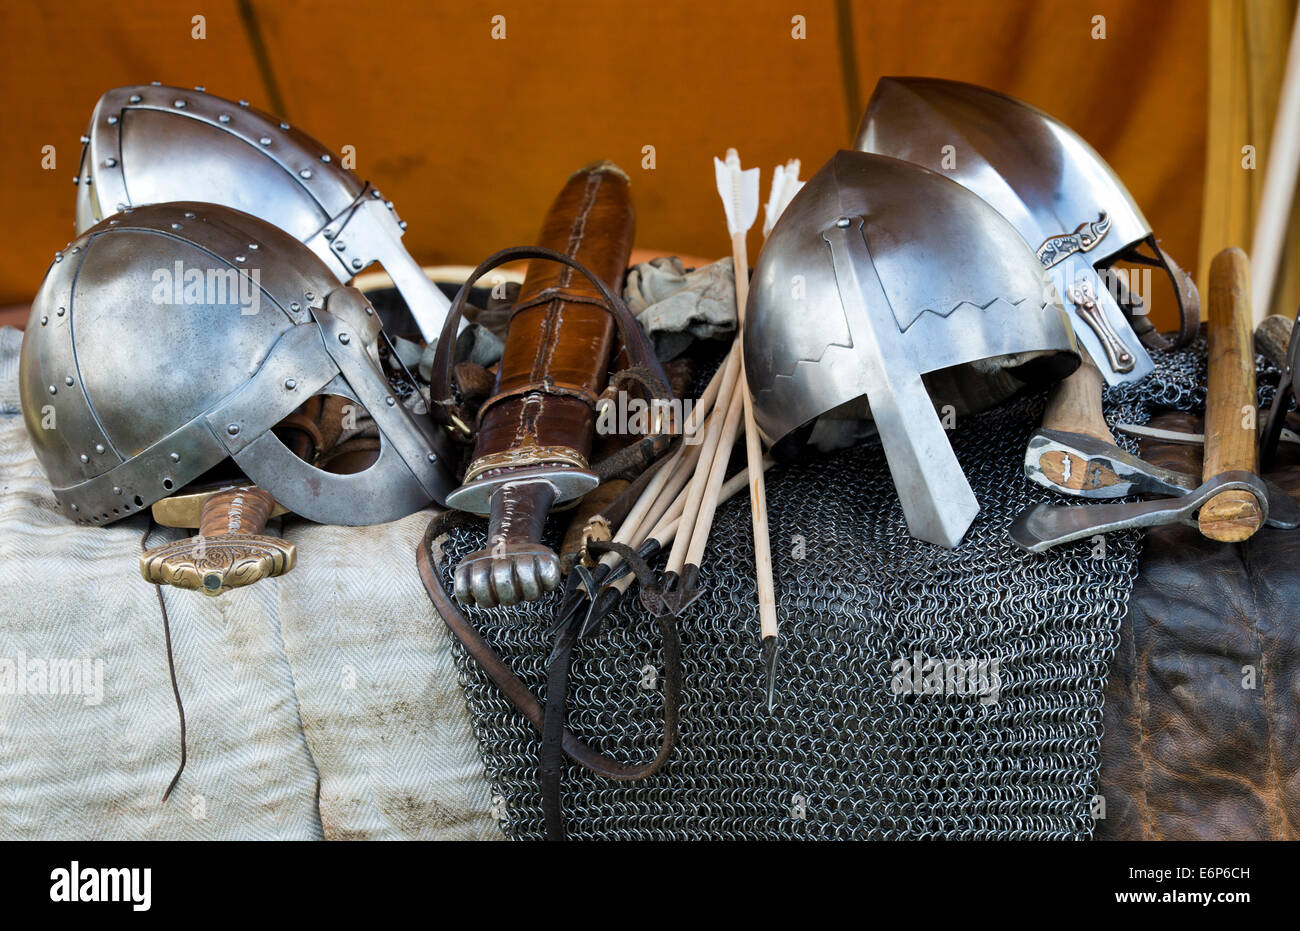 Conjunto de armadura vikinga - Casco, escudo y espada. Croquis dibujados a  mano de color Imagen Vector de stock - Alamy